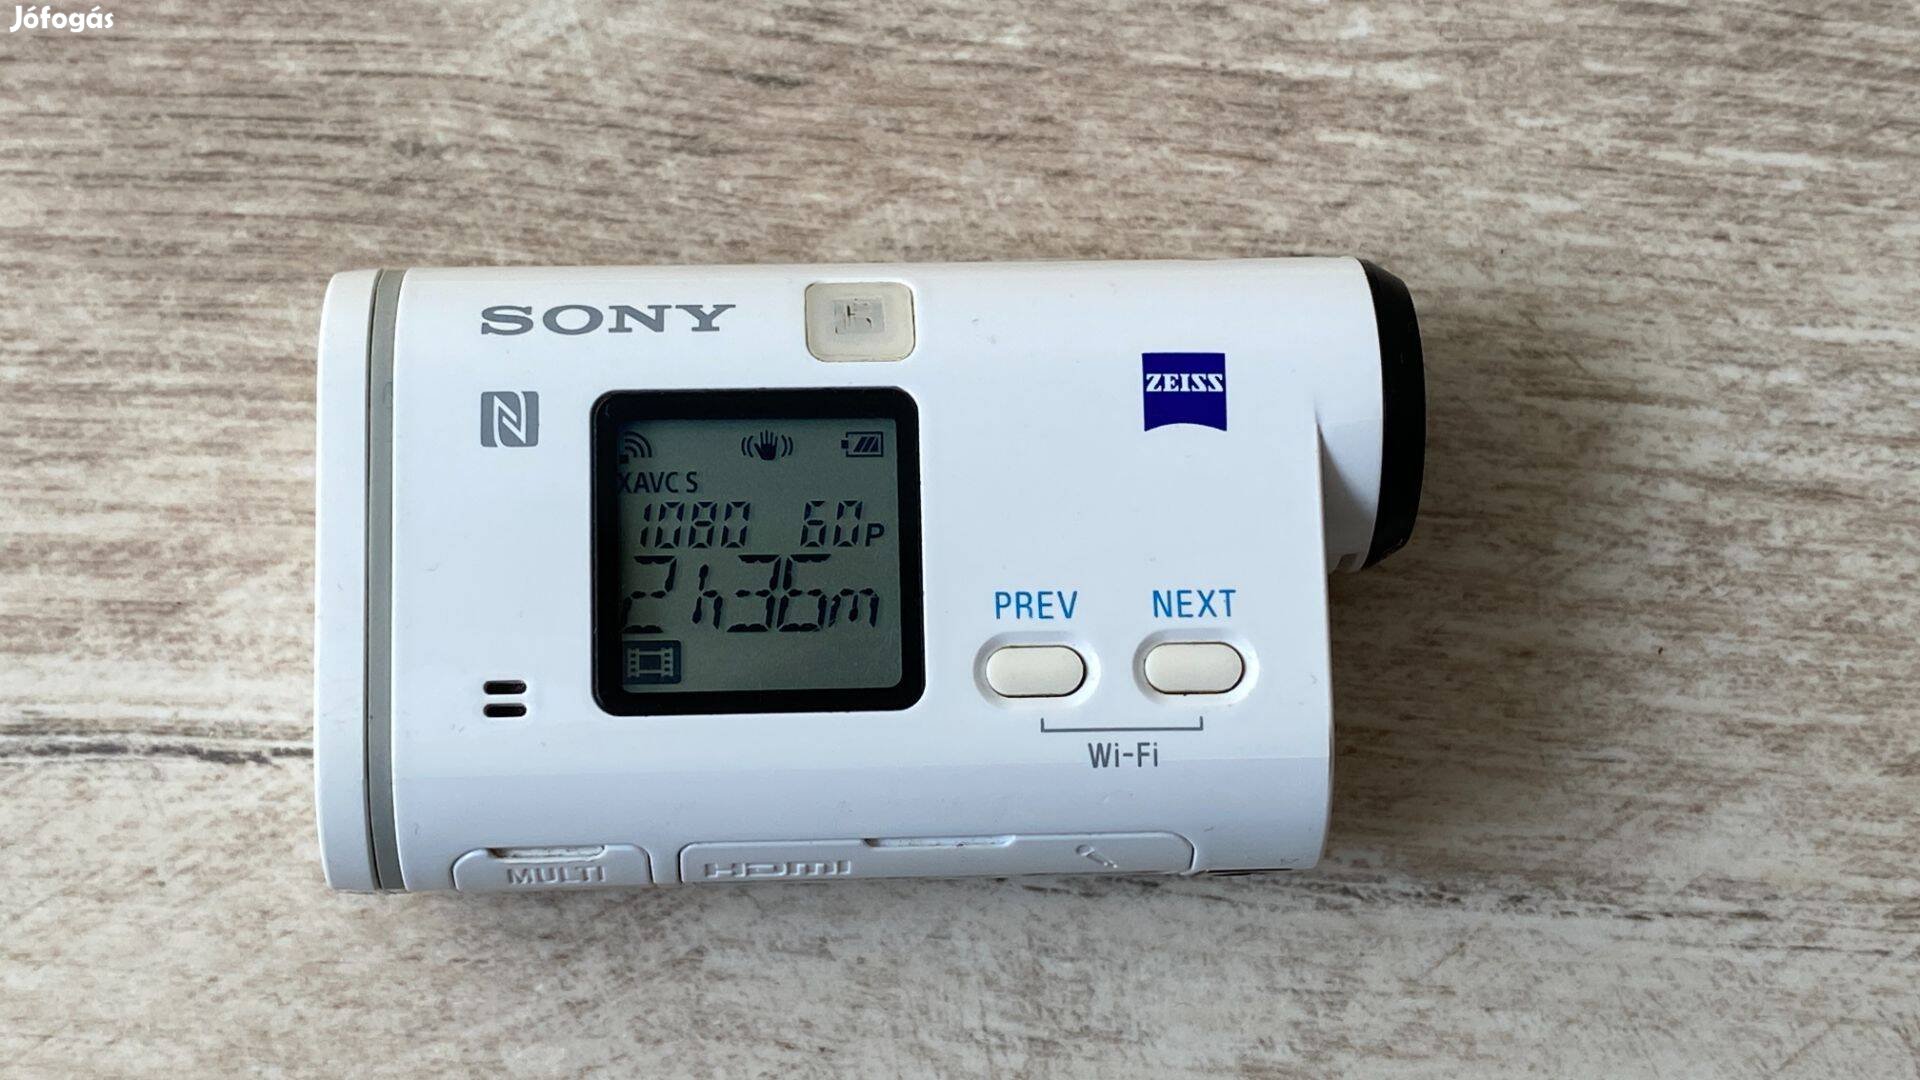 Sony HDR-AS200 akciókamera tartozékokkal